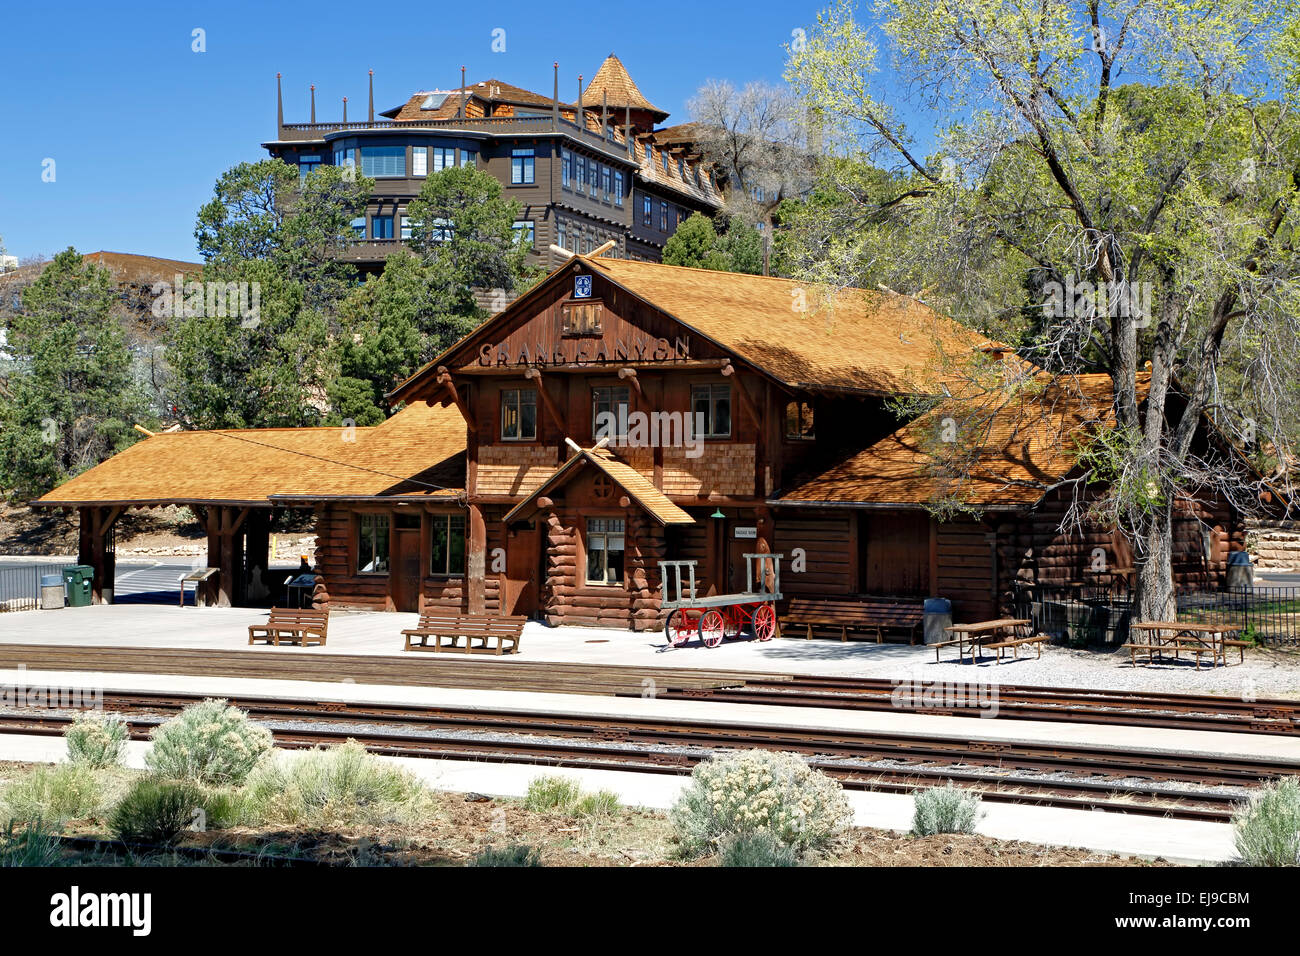 Historische Grand Canyon Railway Depot (El Tovar Hotel im Hintergrund), Grand Canyon National Park, Arizona USA Stockfoto